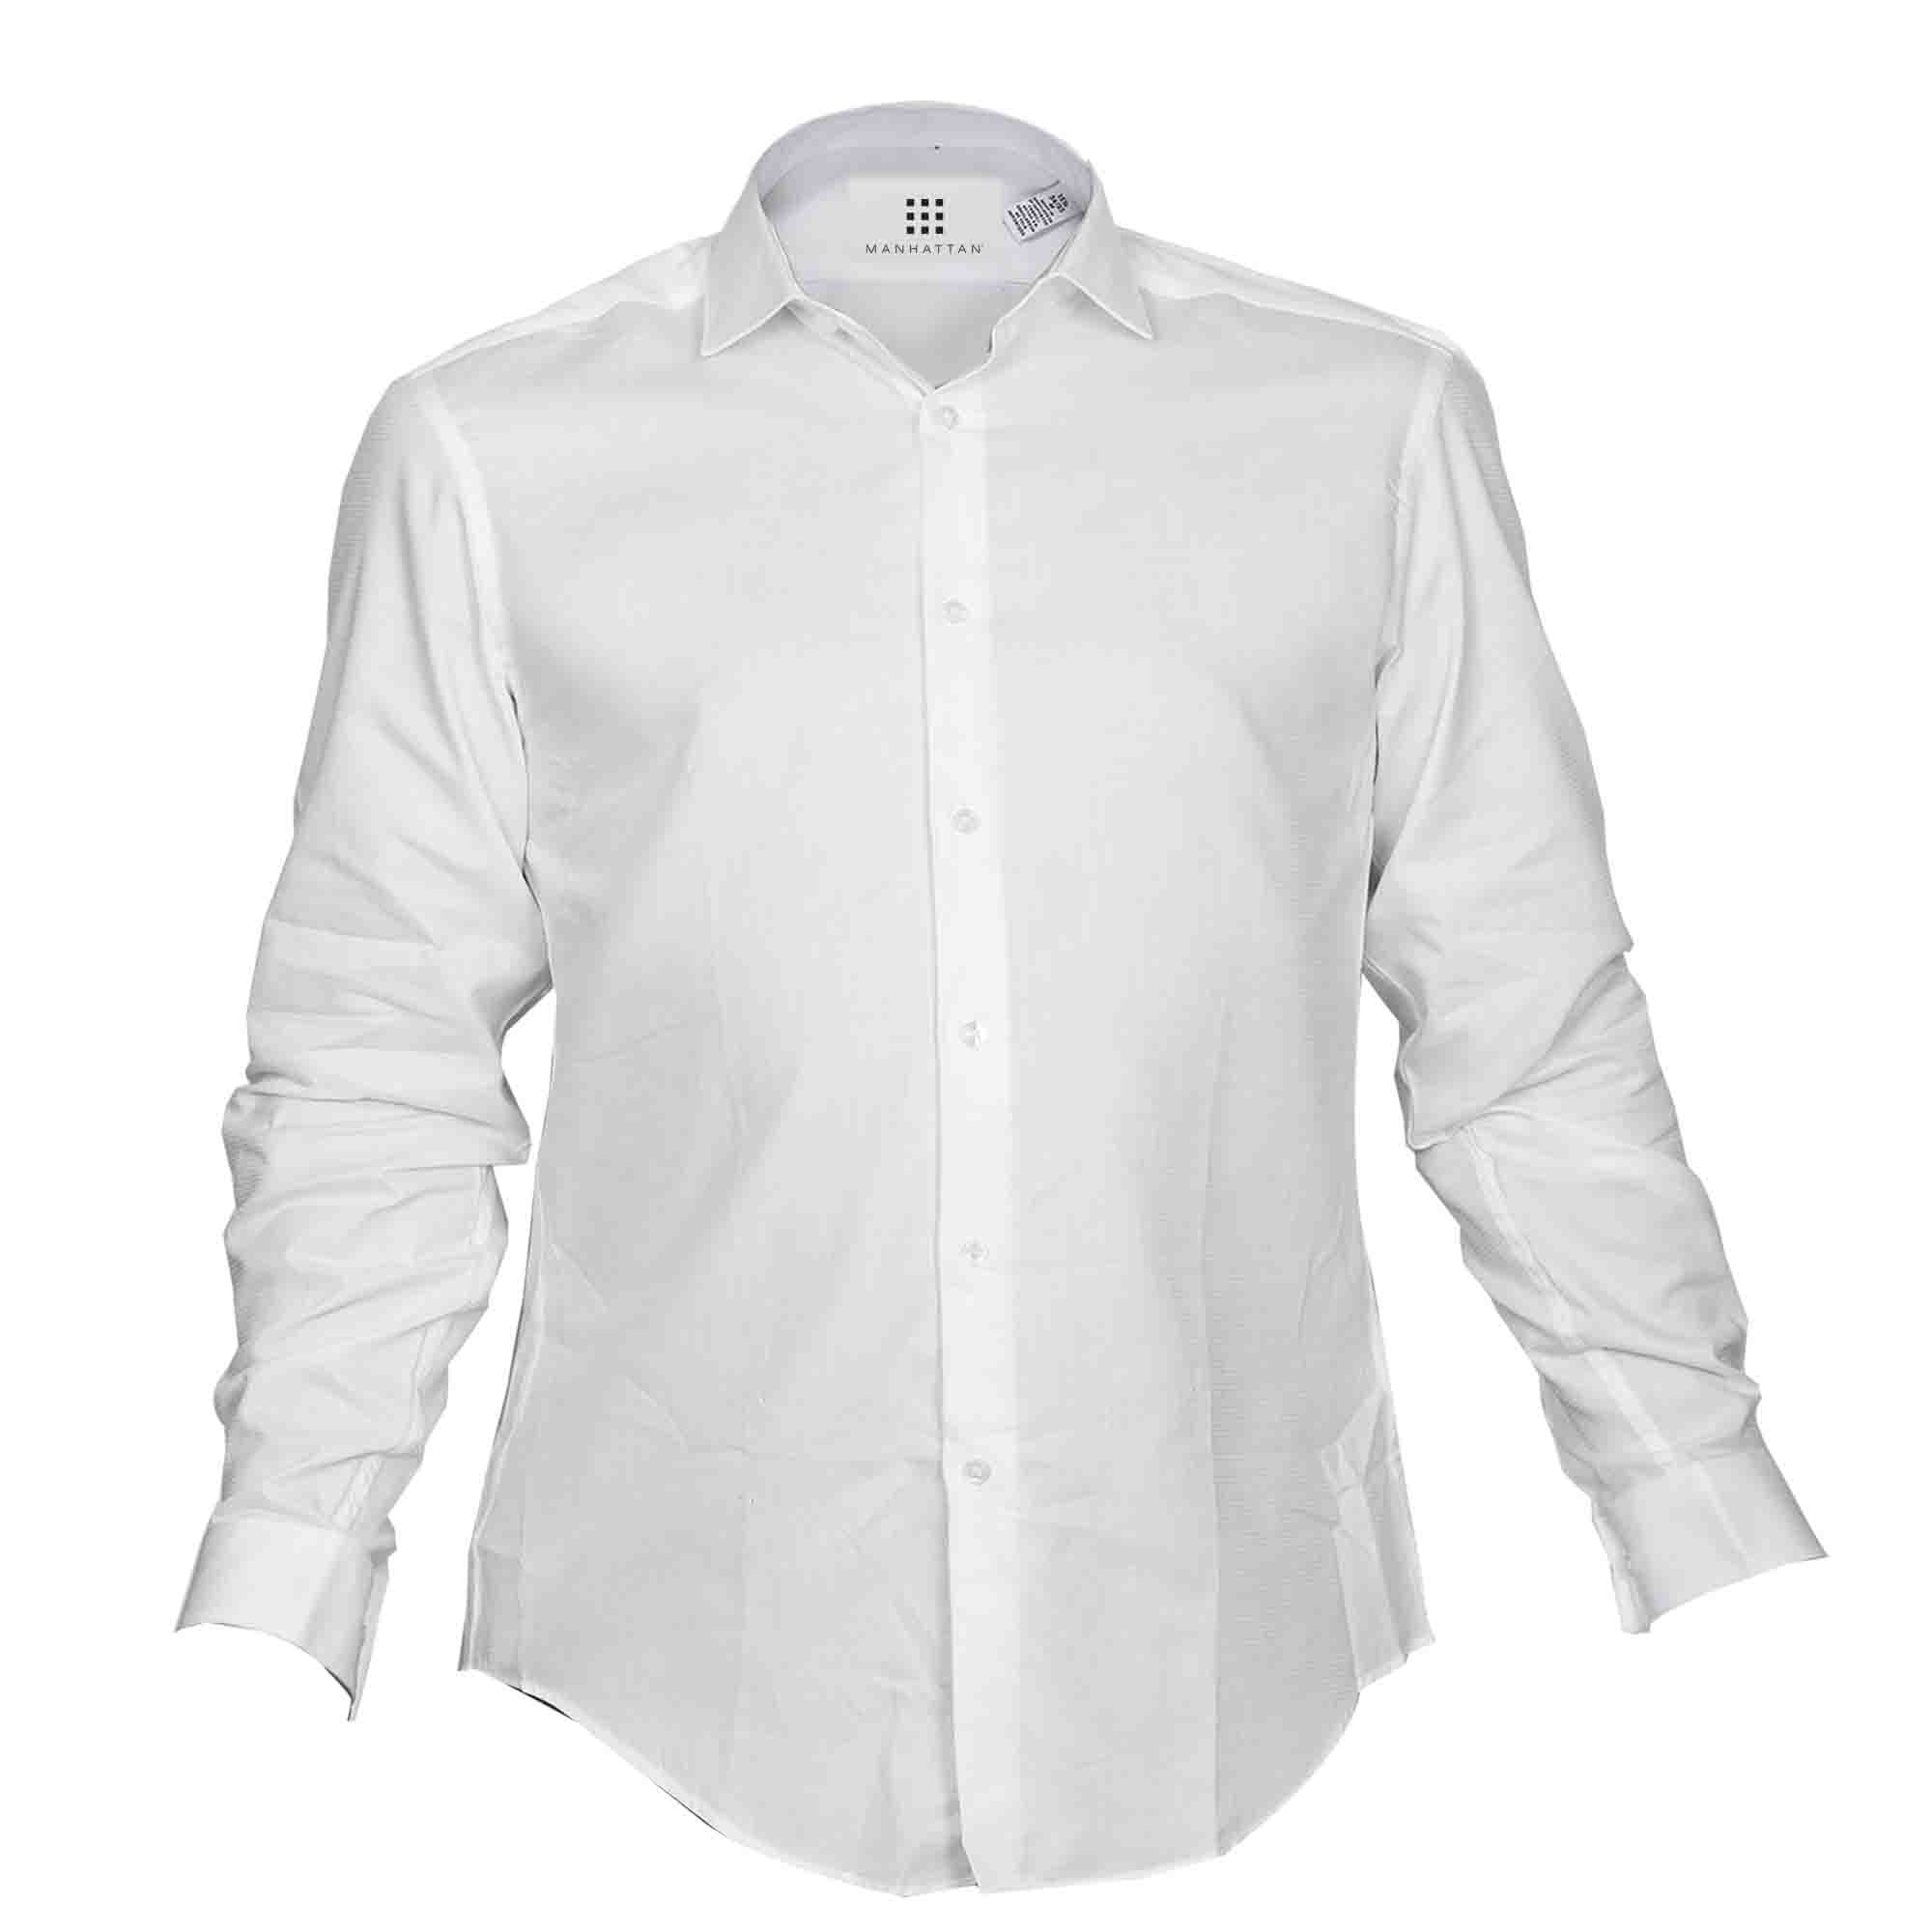 Download Camisa de vestir blanca manhattan para caballero - Sears